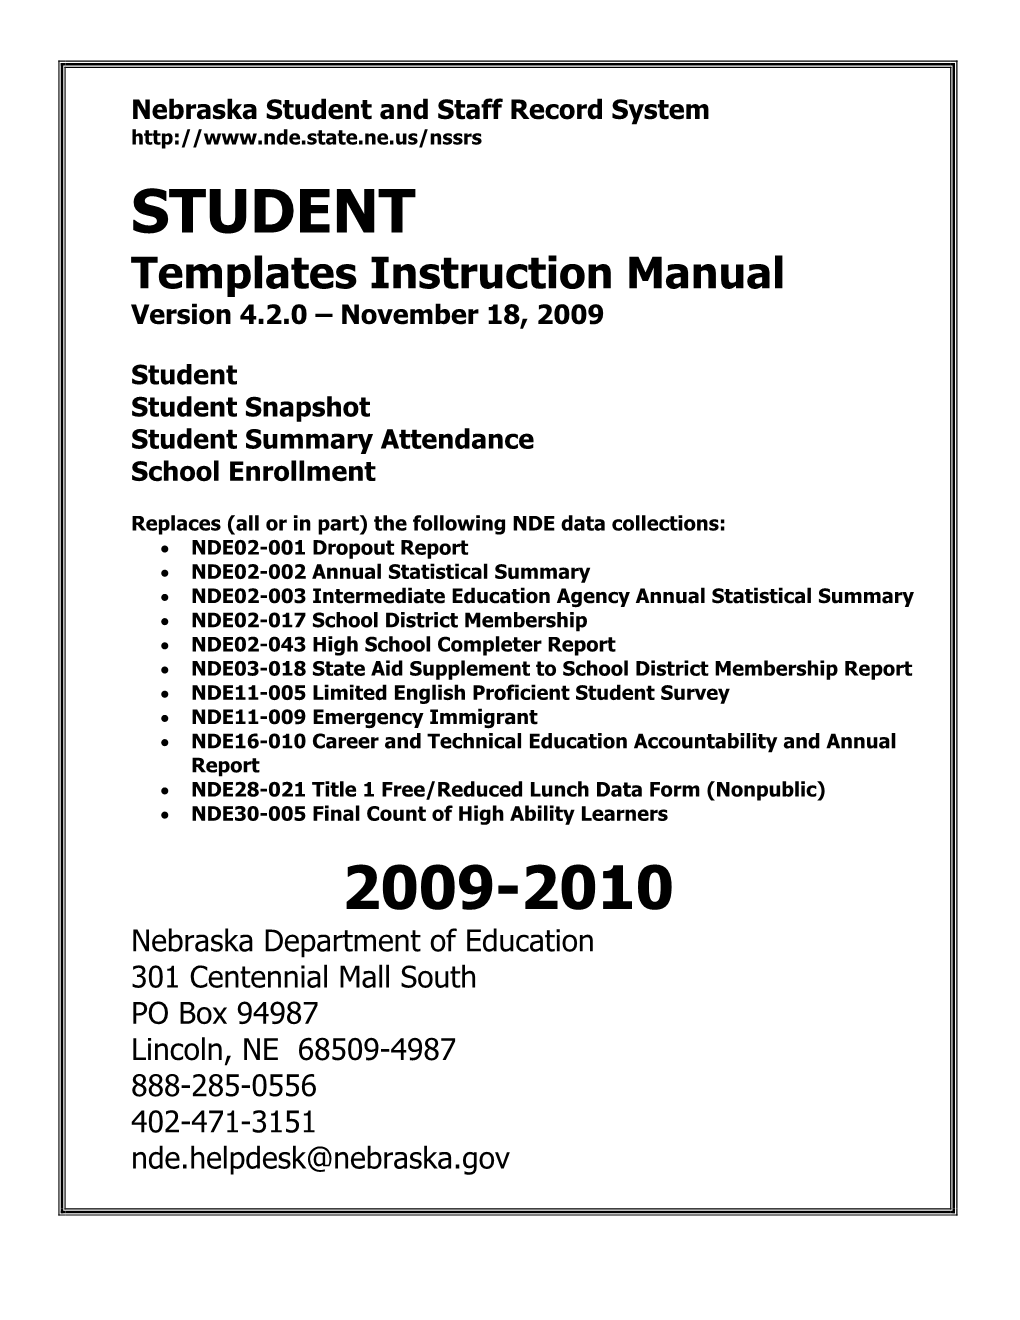 2009-2010 Student Templates Instruction Manual